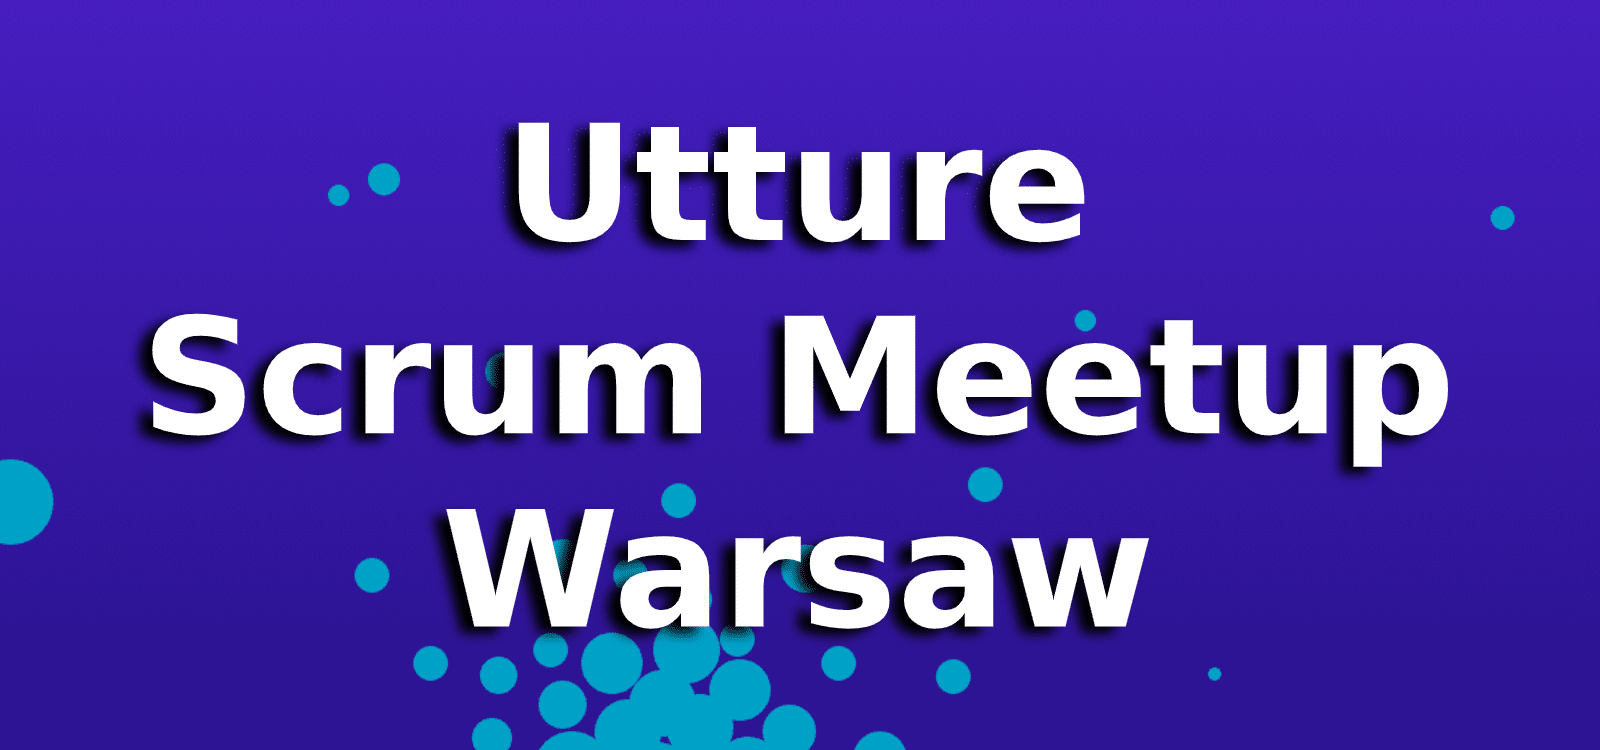 Utture Scrum Meetup Warsaw logo